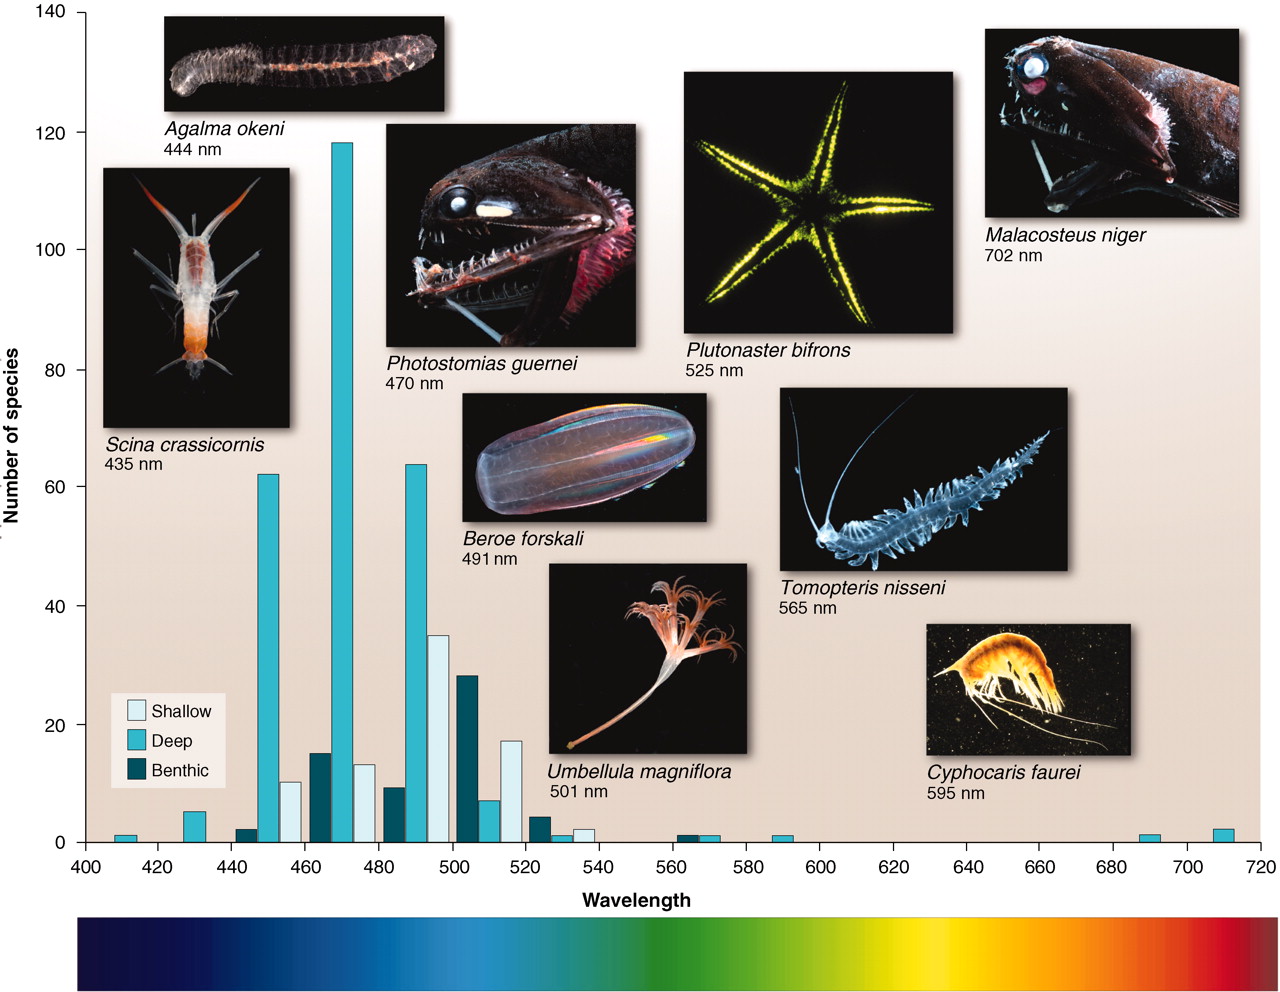 Distribution of bioluminescent species across the sea zones